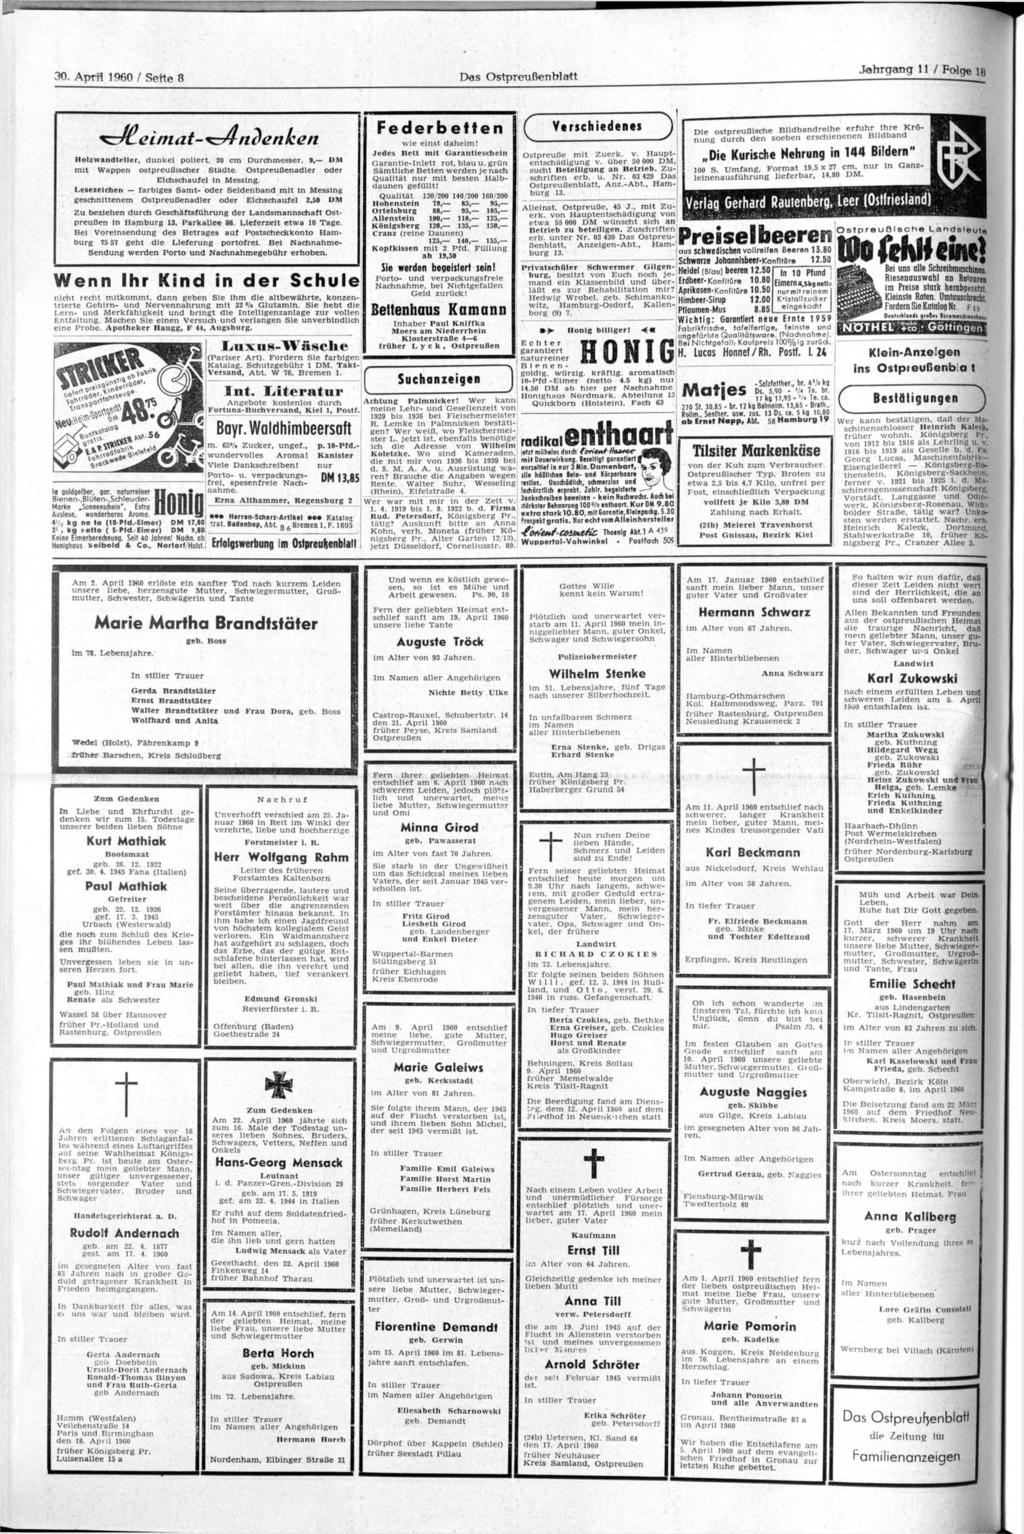 30. April 1960 / Seite 8 Das Ostpreußenblatt Jahrgang 11 / Folge 18 an Holzwandteller, dunkel poliert, 20 cm Durchmesser. 9, DM mit Wappen ostpreußischer Städte.